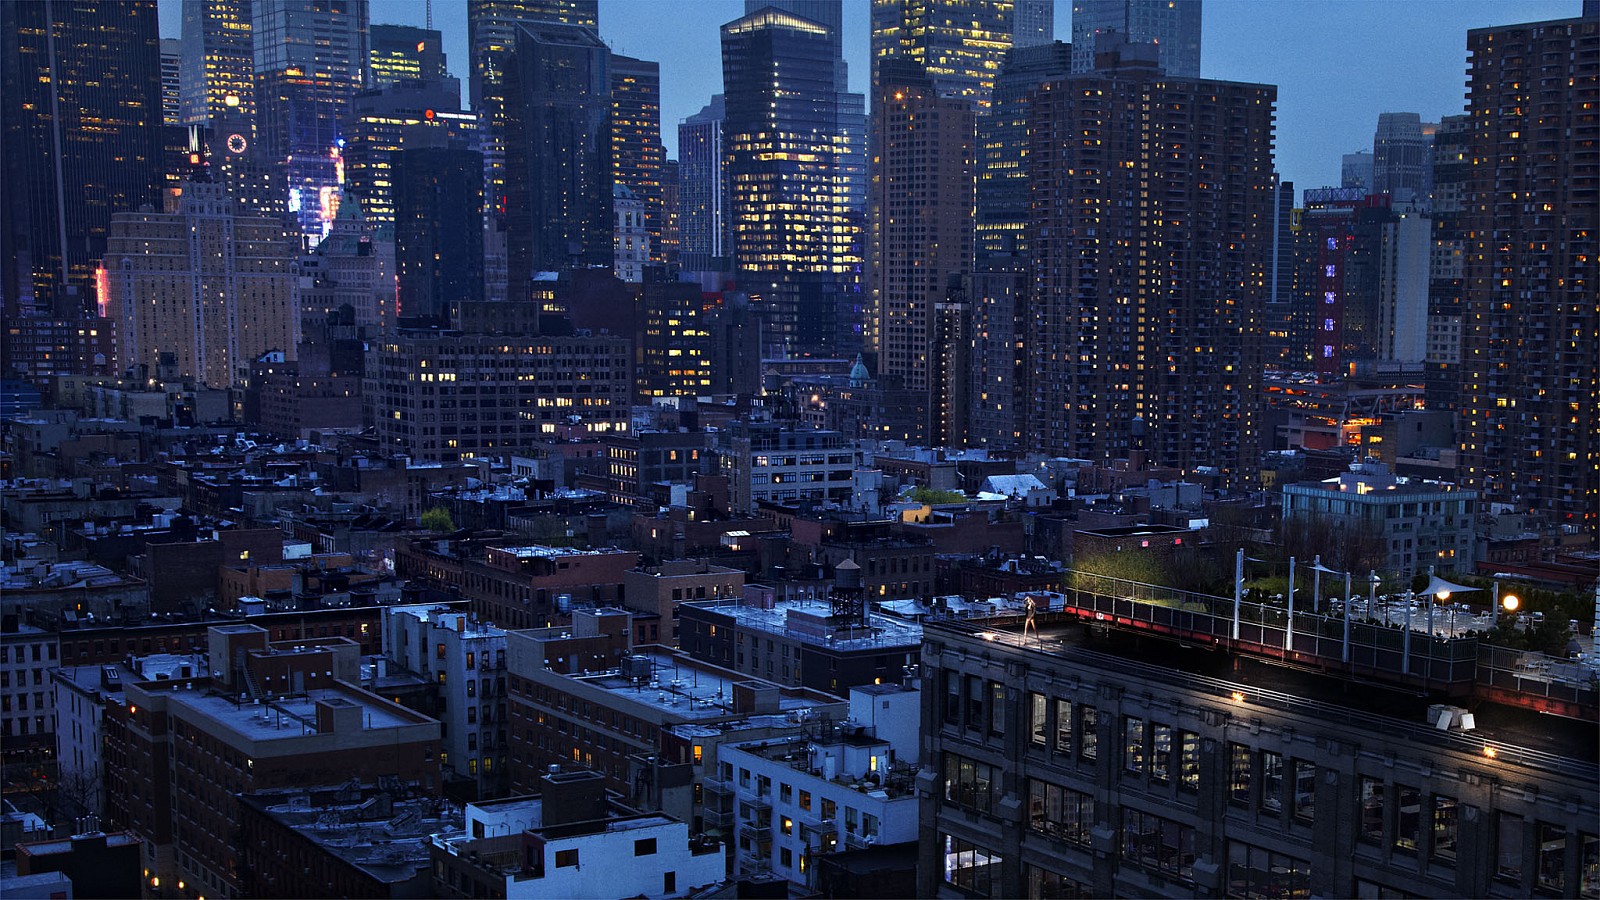 David Drebin, Girl in New York, 2011
Digital C Print, 20 x 35 1/2 inches; 30 x 53 1/4 inches; 40 x 71 inches